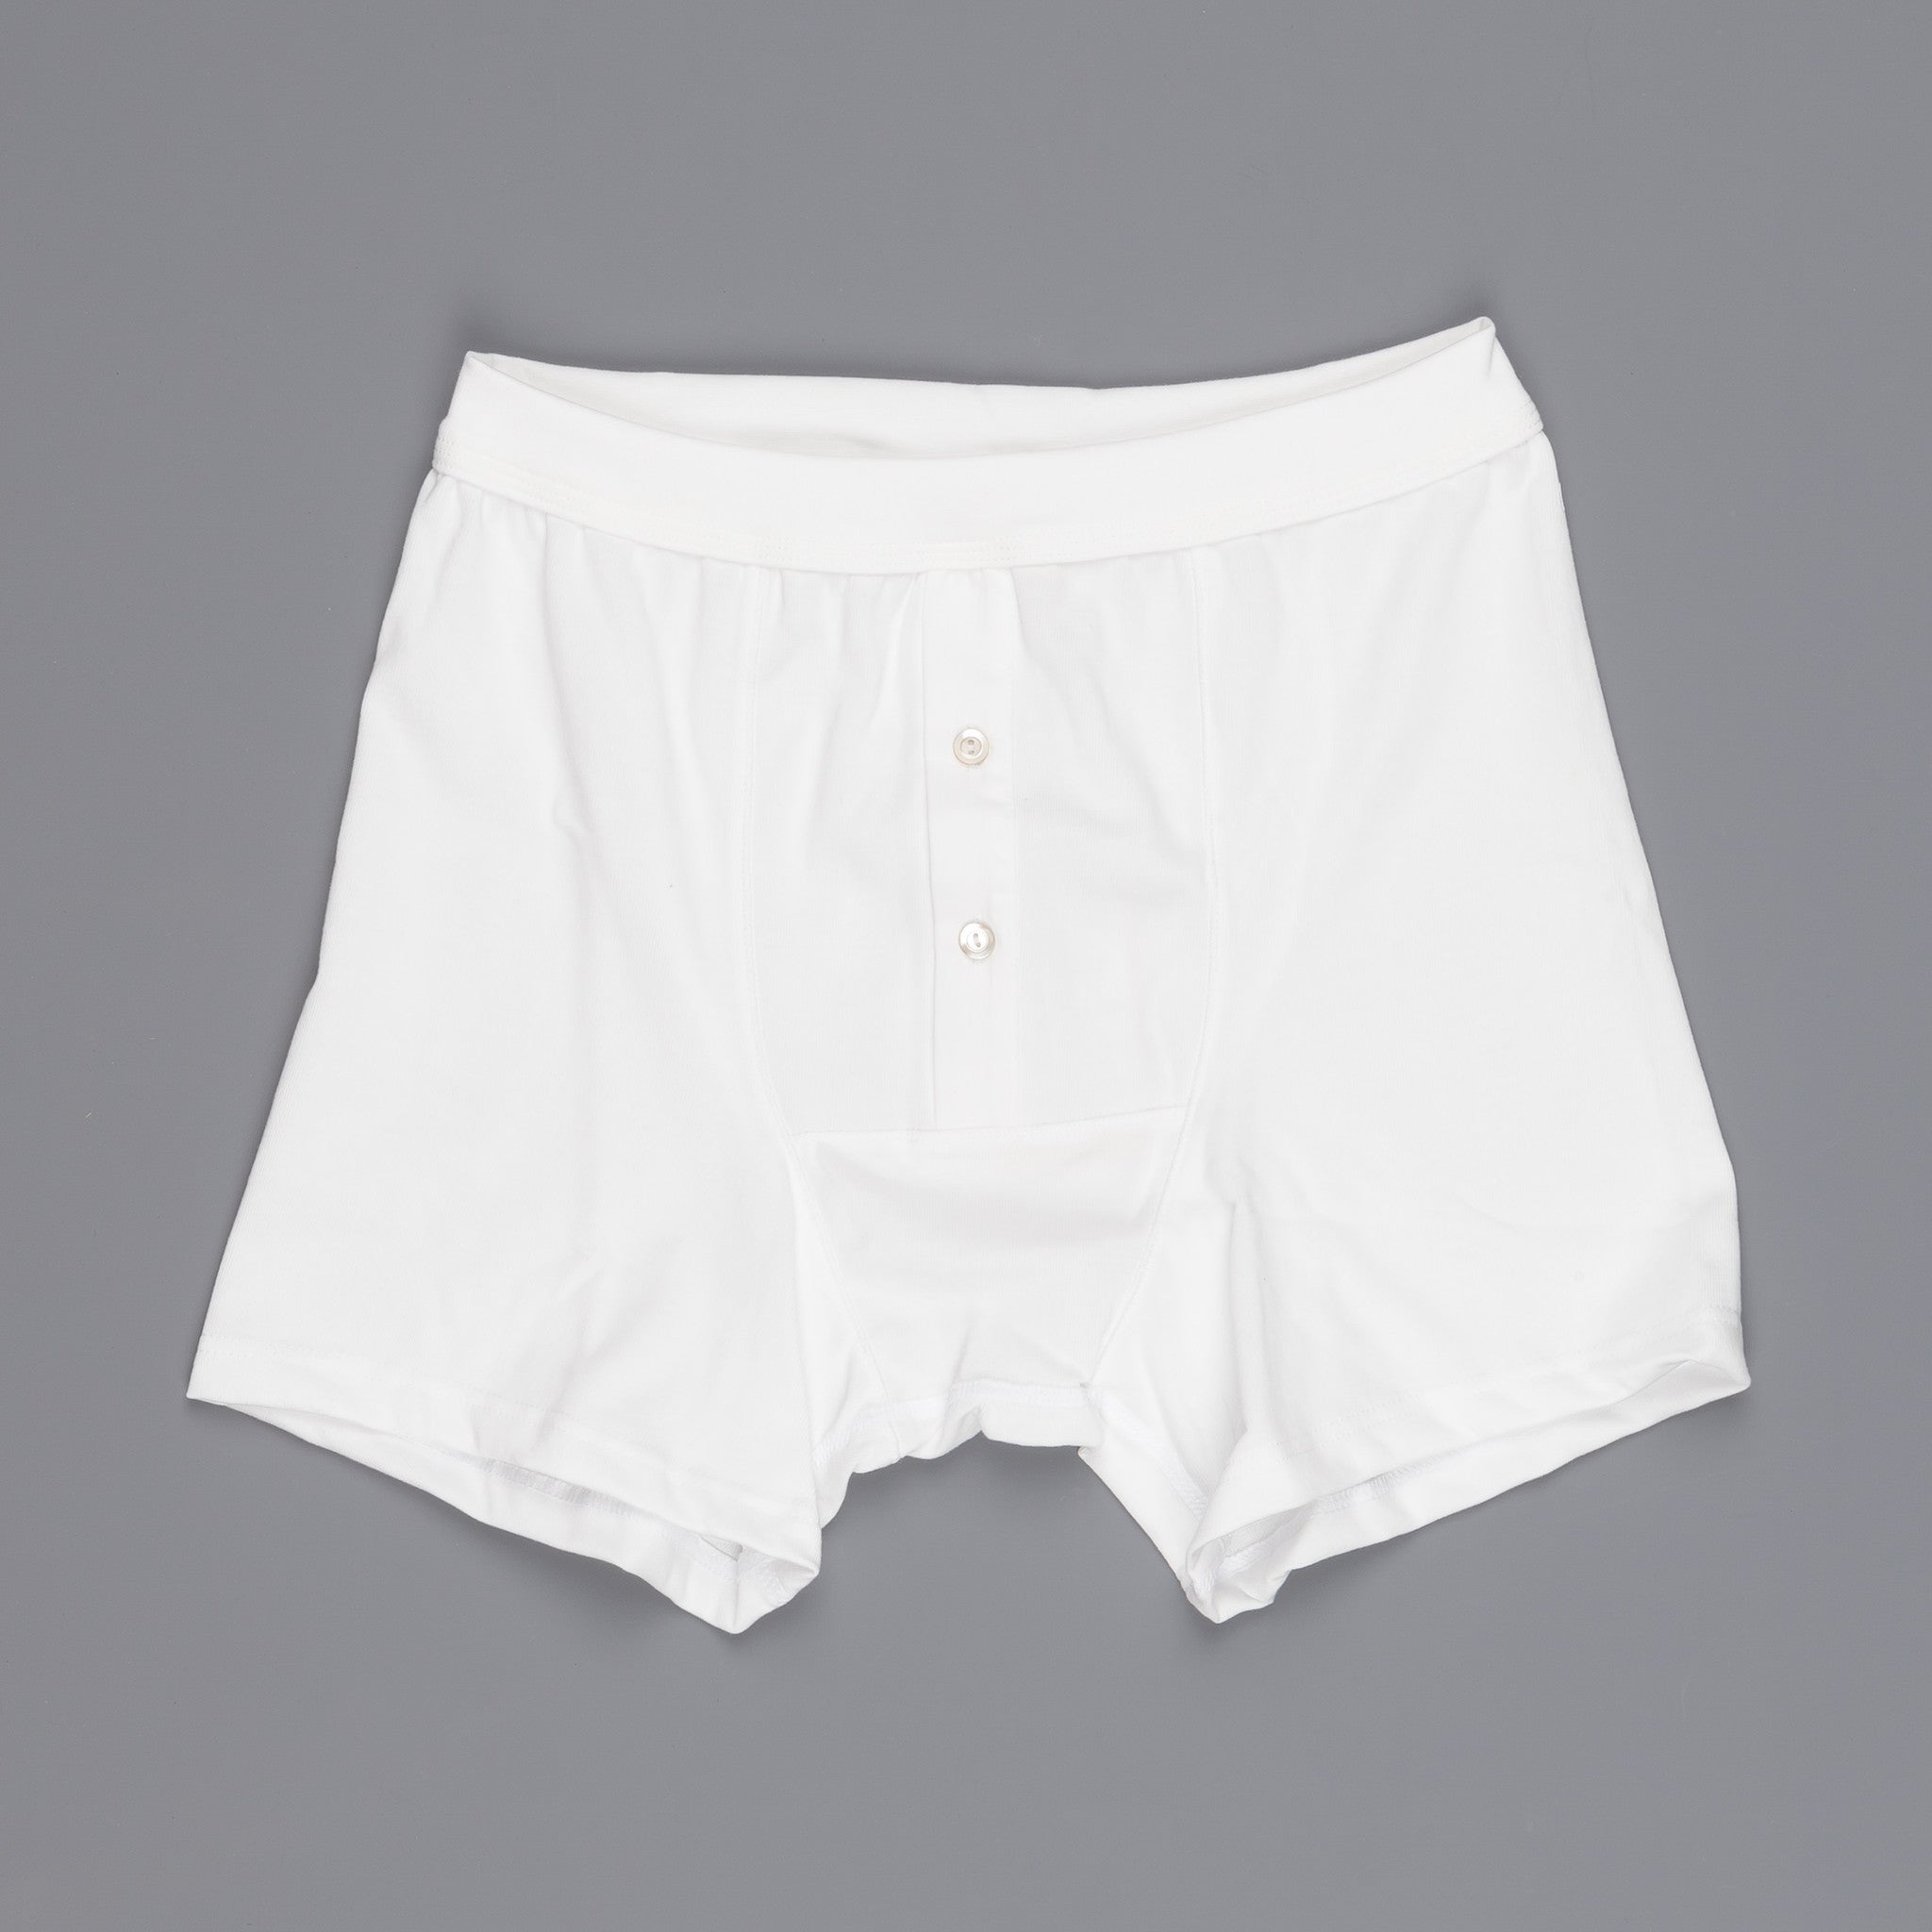 Merz B Schwanen 255 button facing underpants White